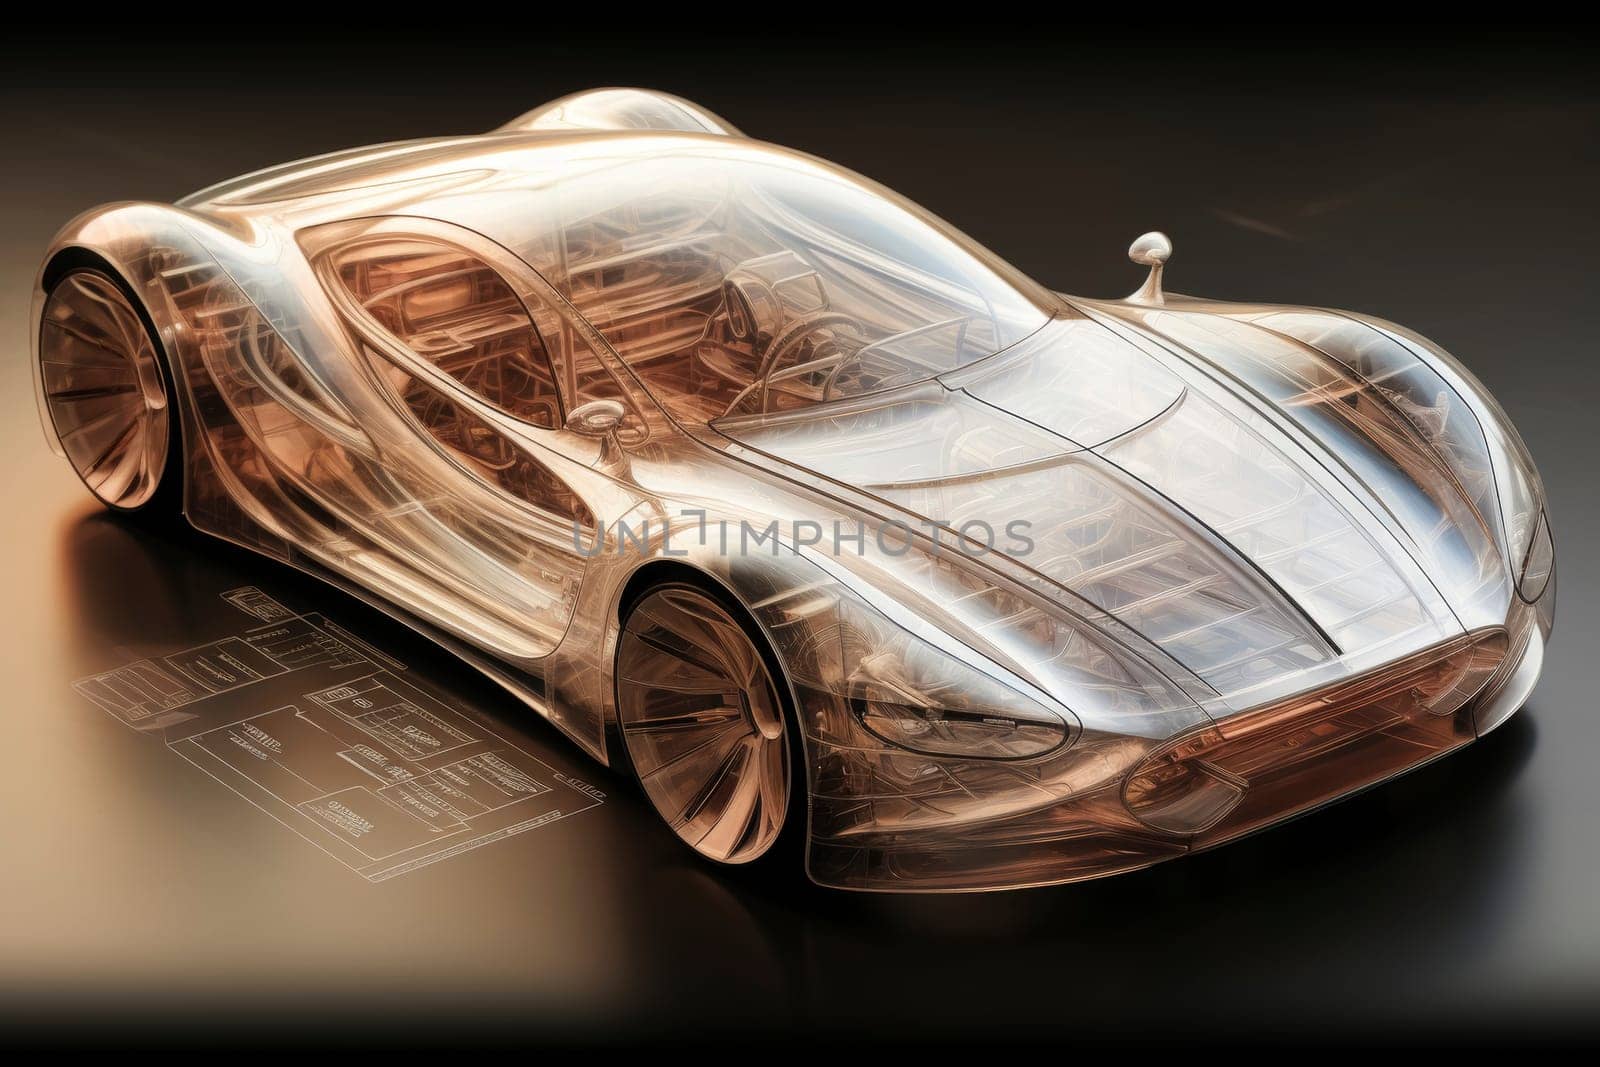 Transparent Car Design Showing Internal Mechanics by andreyz